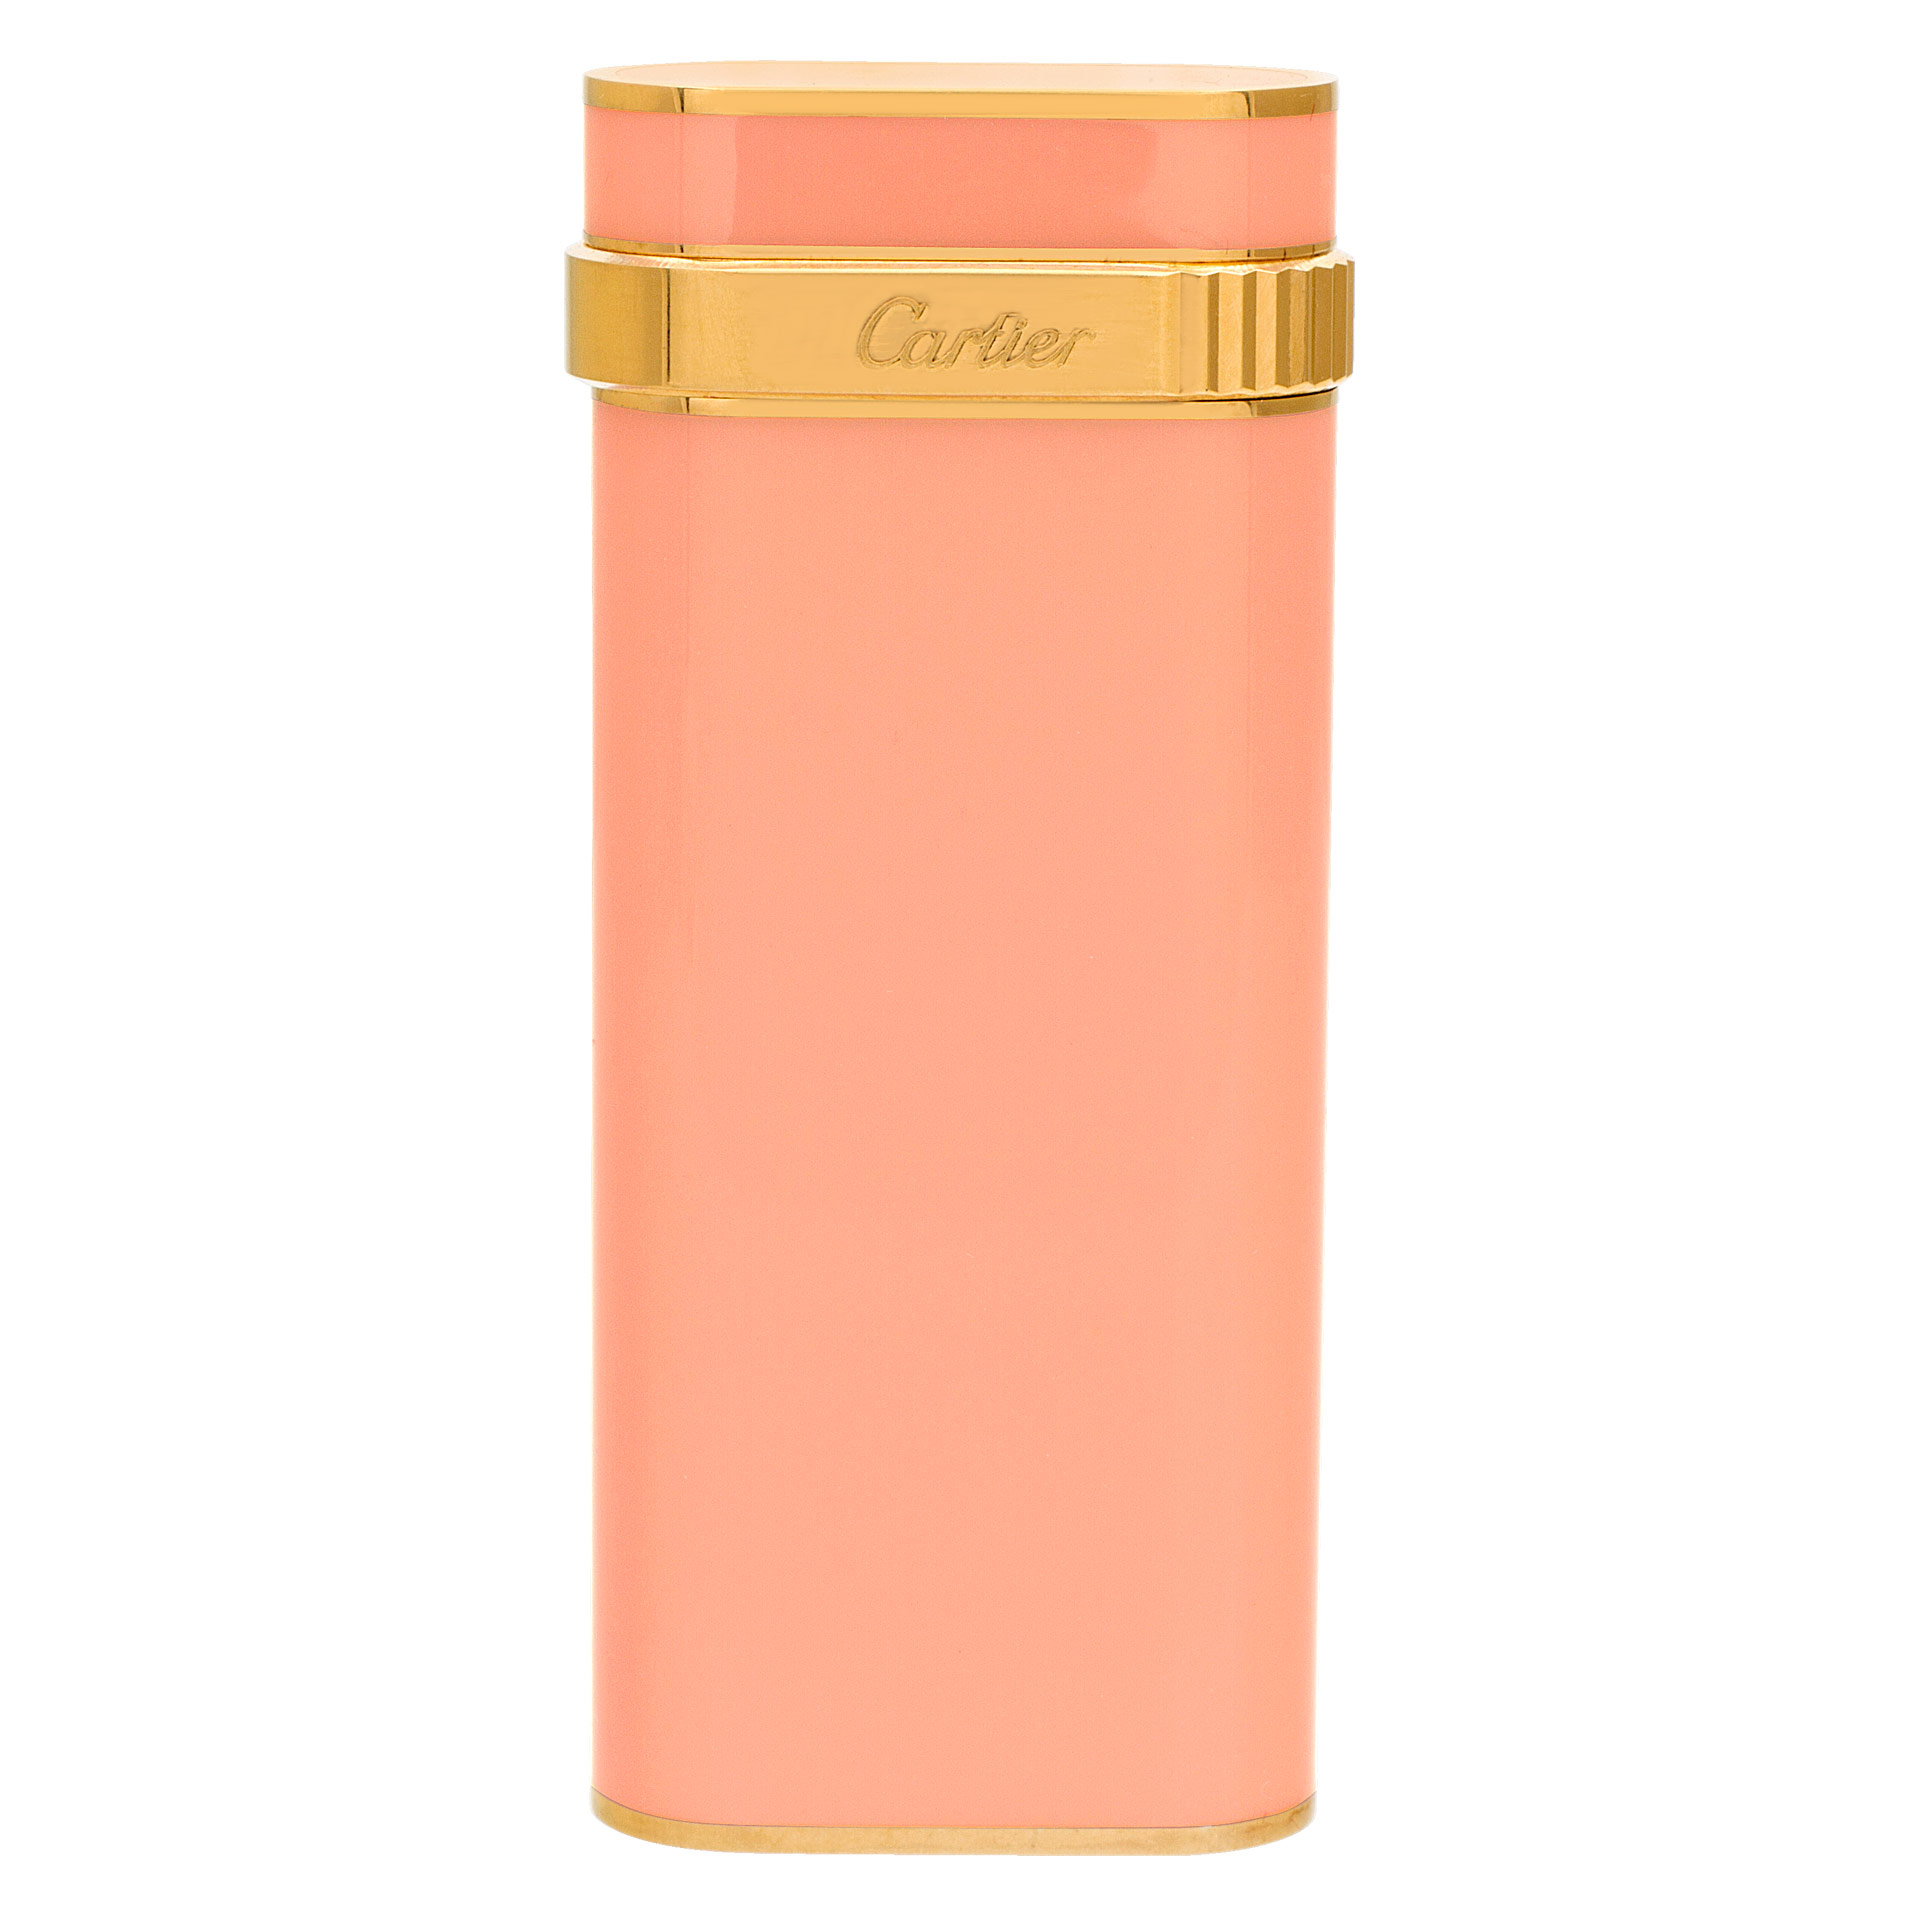 Cartier lighter in baby pink color | eBay